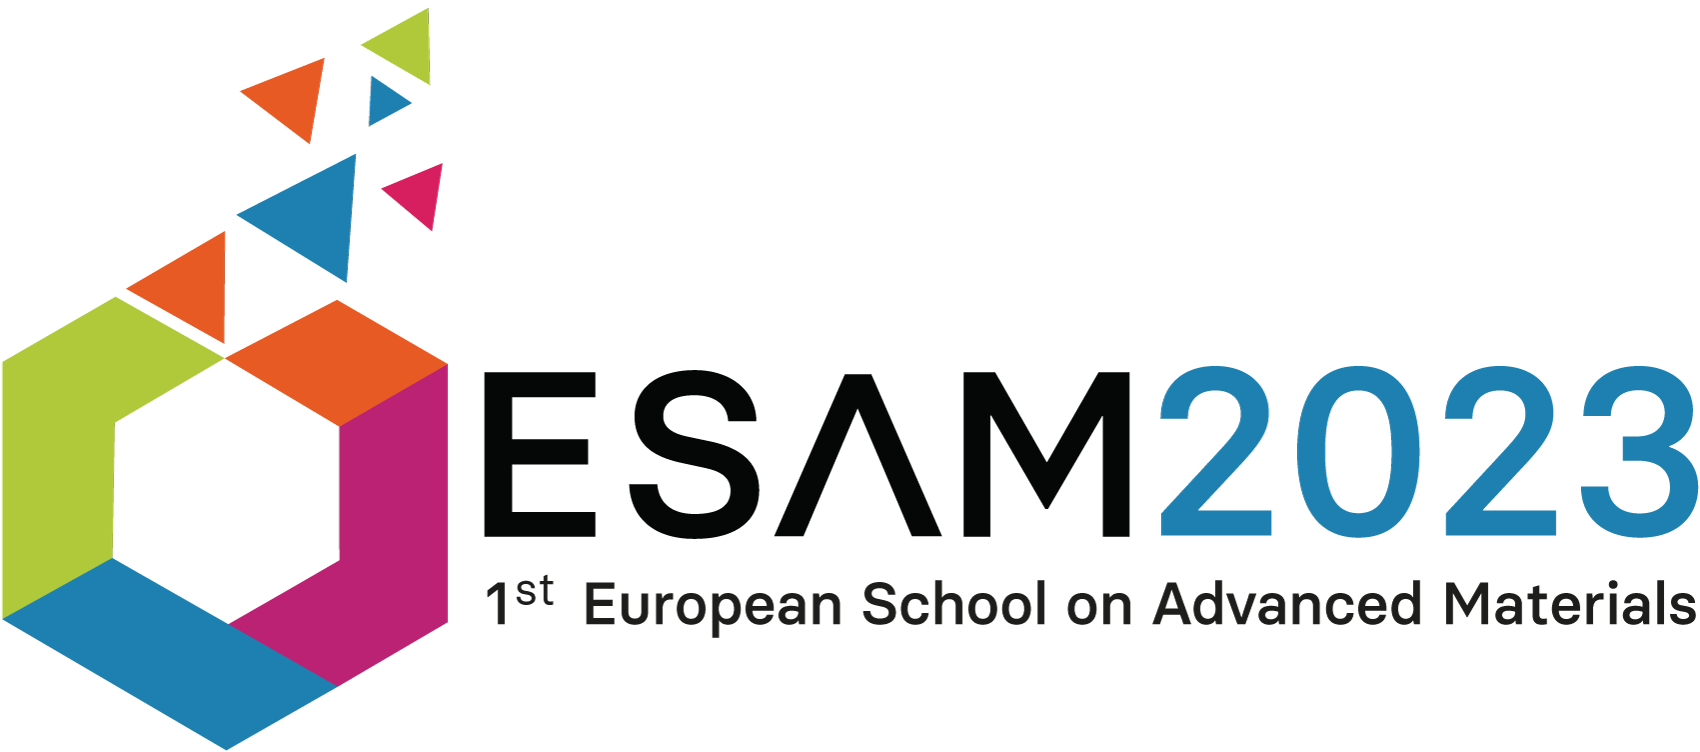 1st European School on Advanced Materials (ESAM2023)